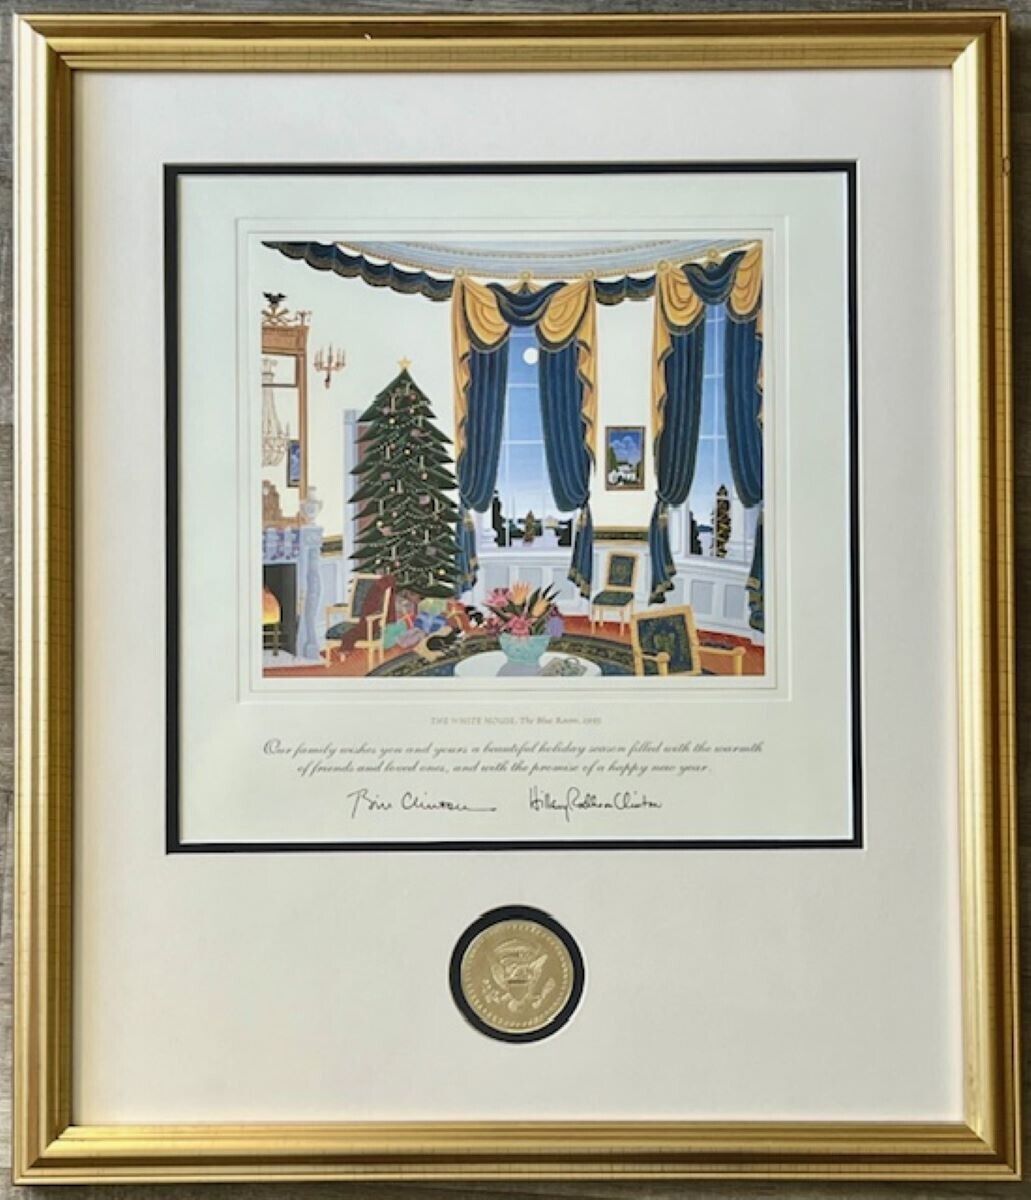 Thomas McKnight, 1995 Art Print, Holiday White House Blue Room, Serigraph, Rare